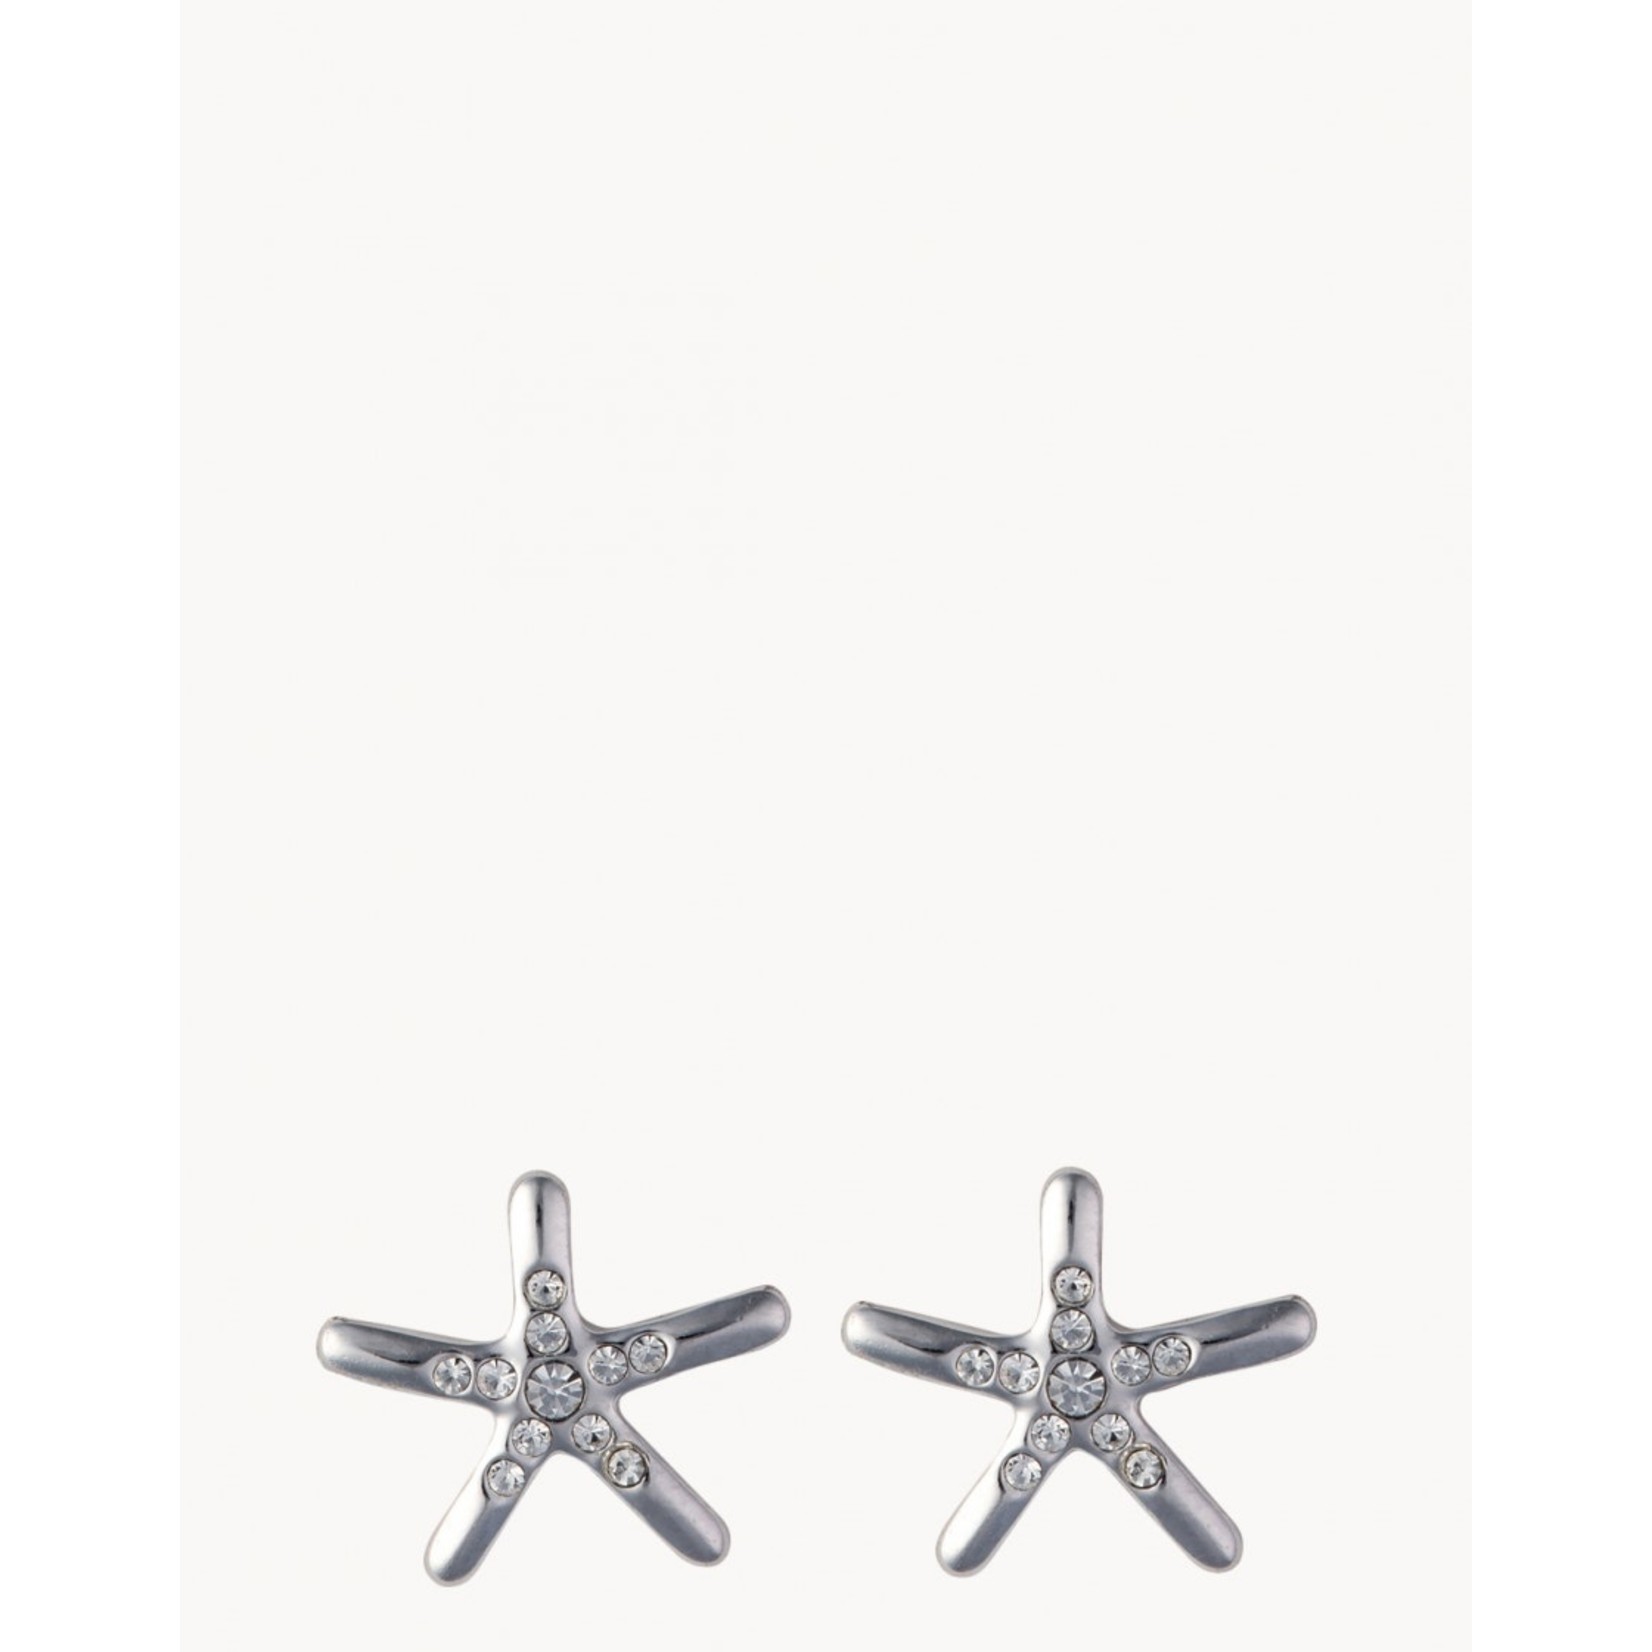 Spartina Sea La Vie Stud Earrings Shine/Starfish -  Silver